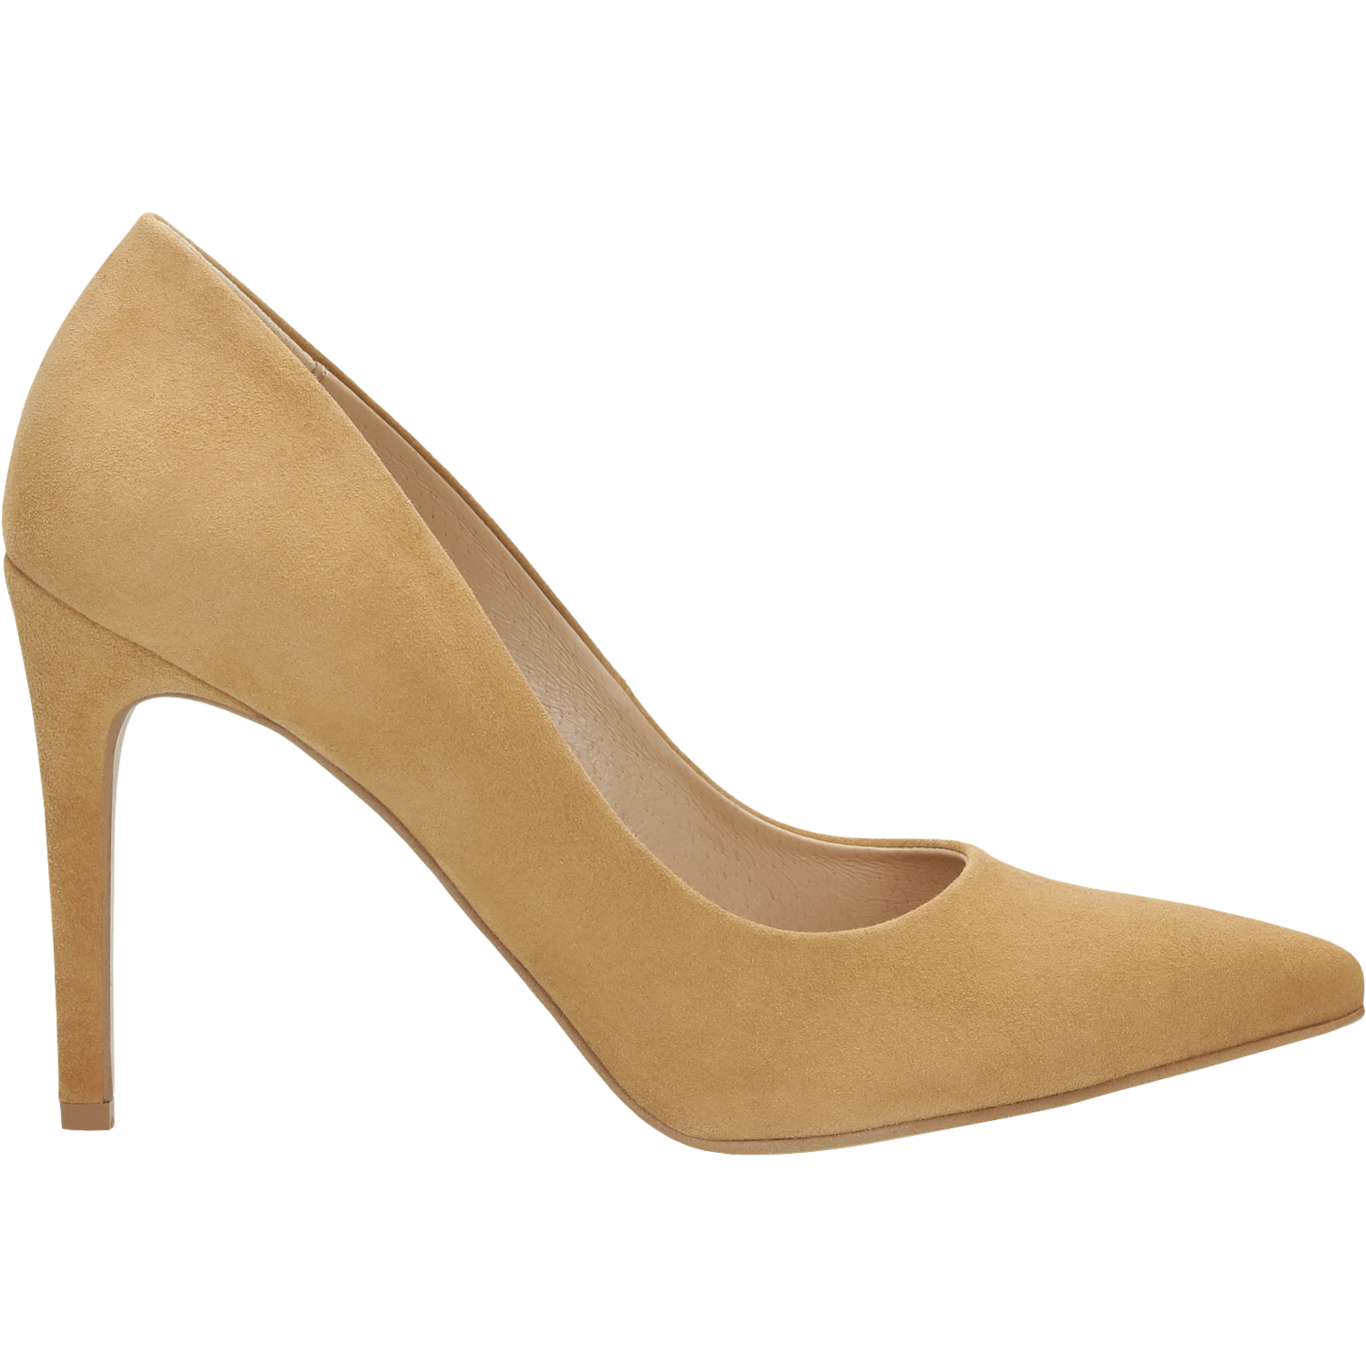 Women's high-heels 7386-62 | Wojas.eu online store